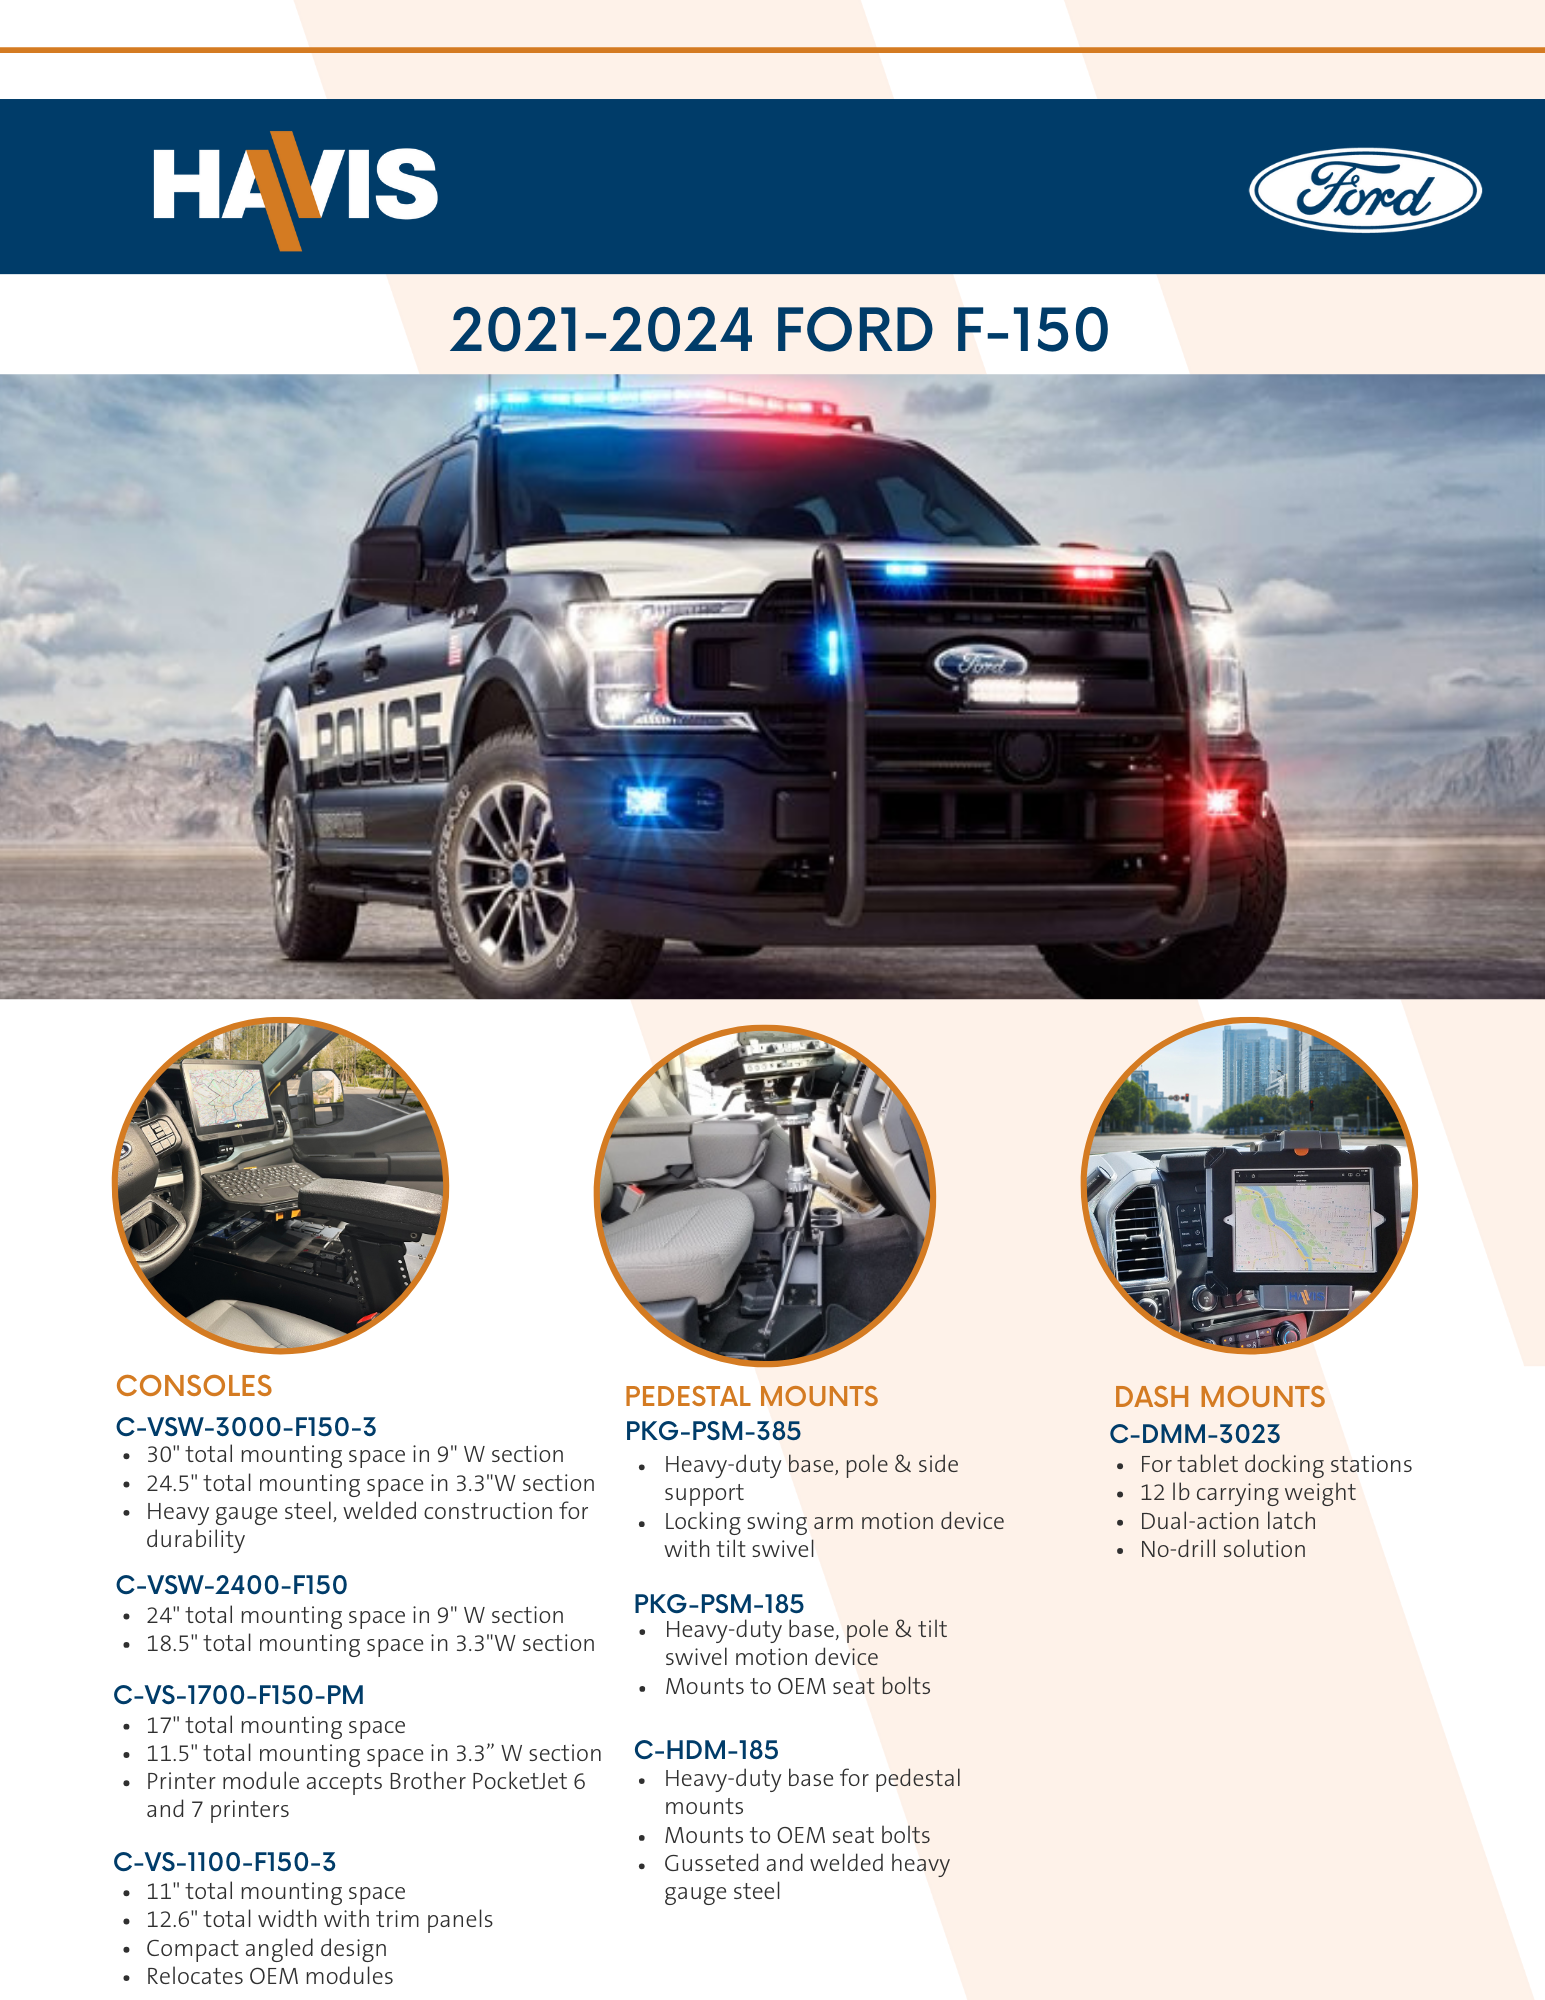 2021-2024 Ford F-150 Public Safety Teaser Sheet